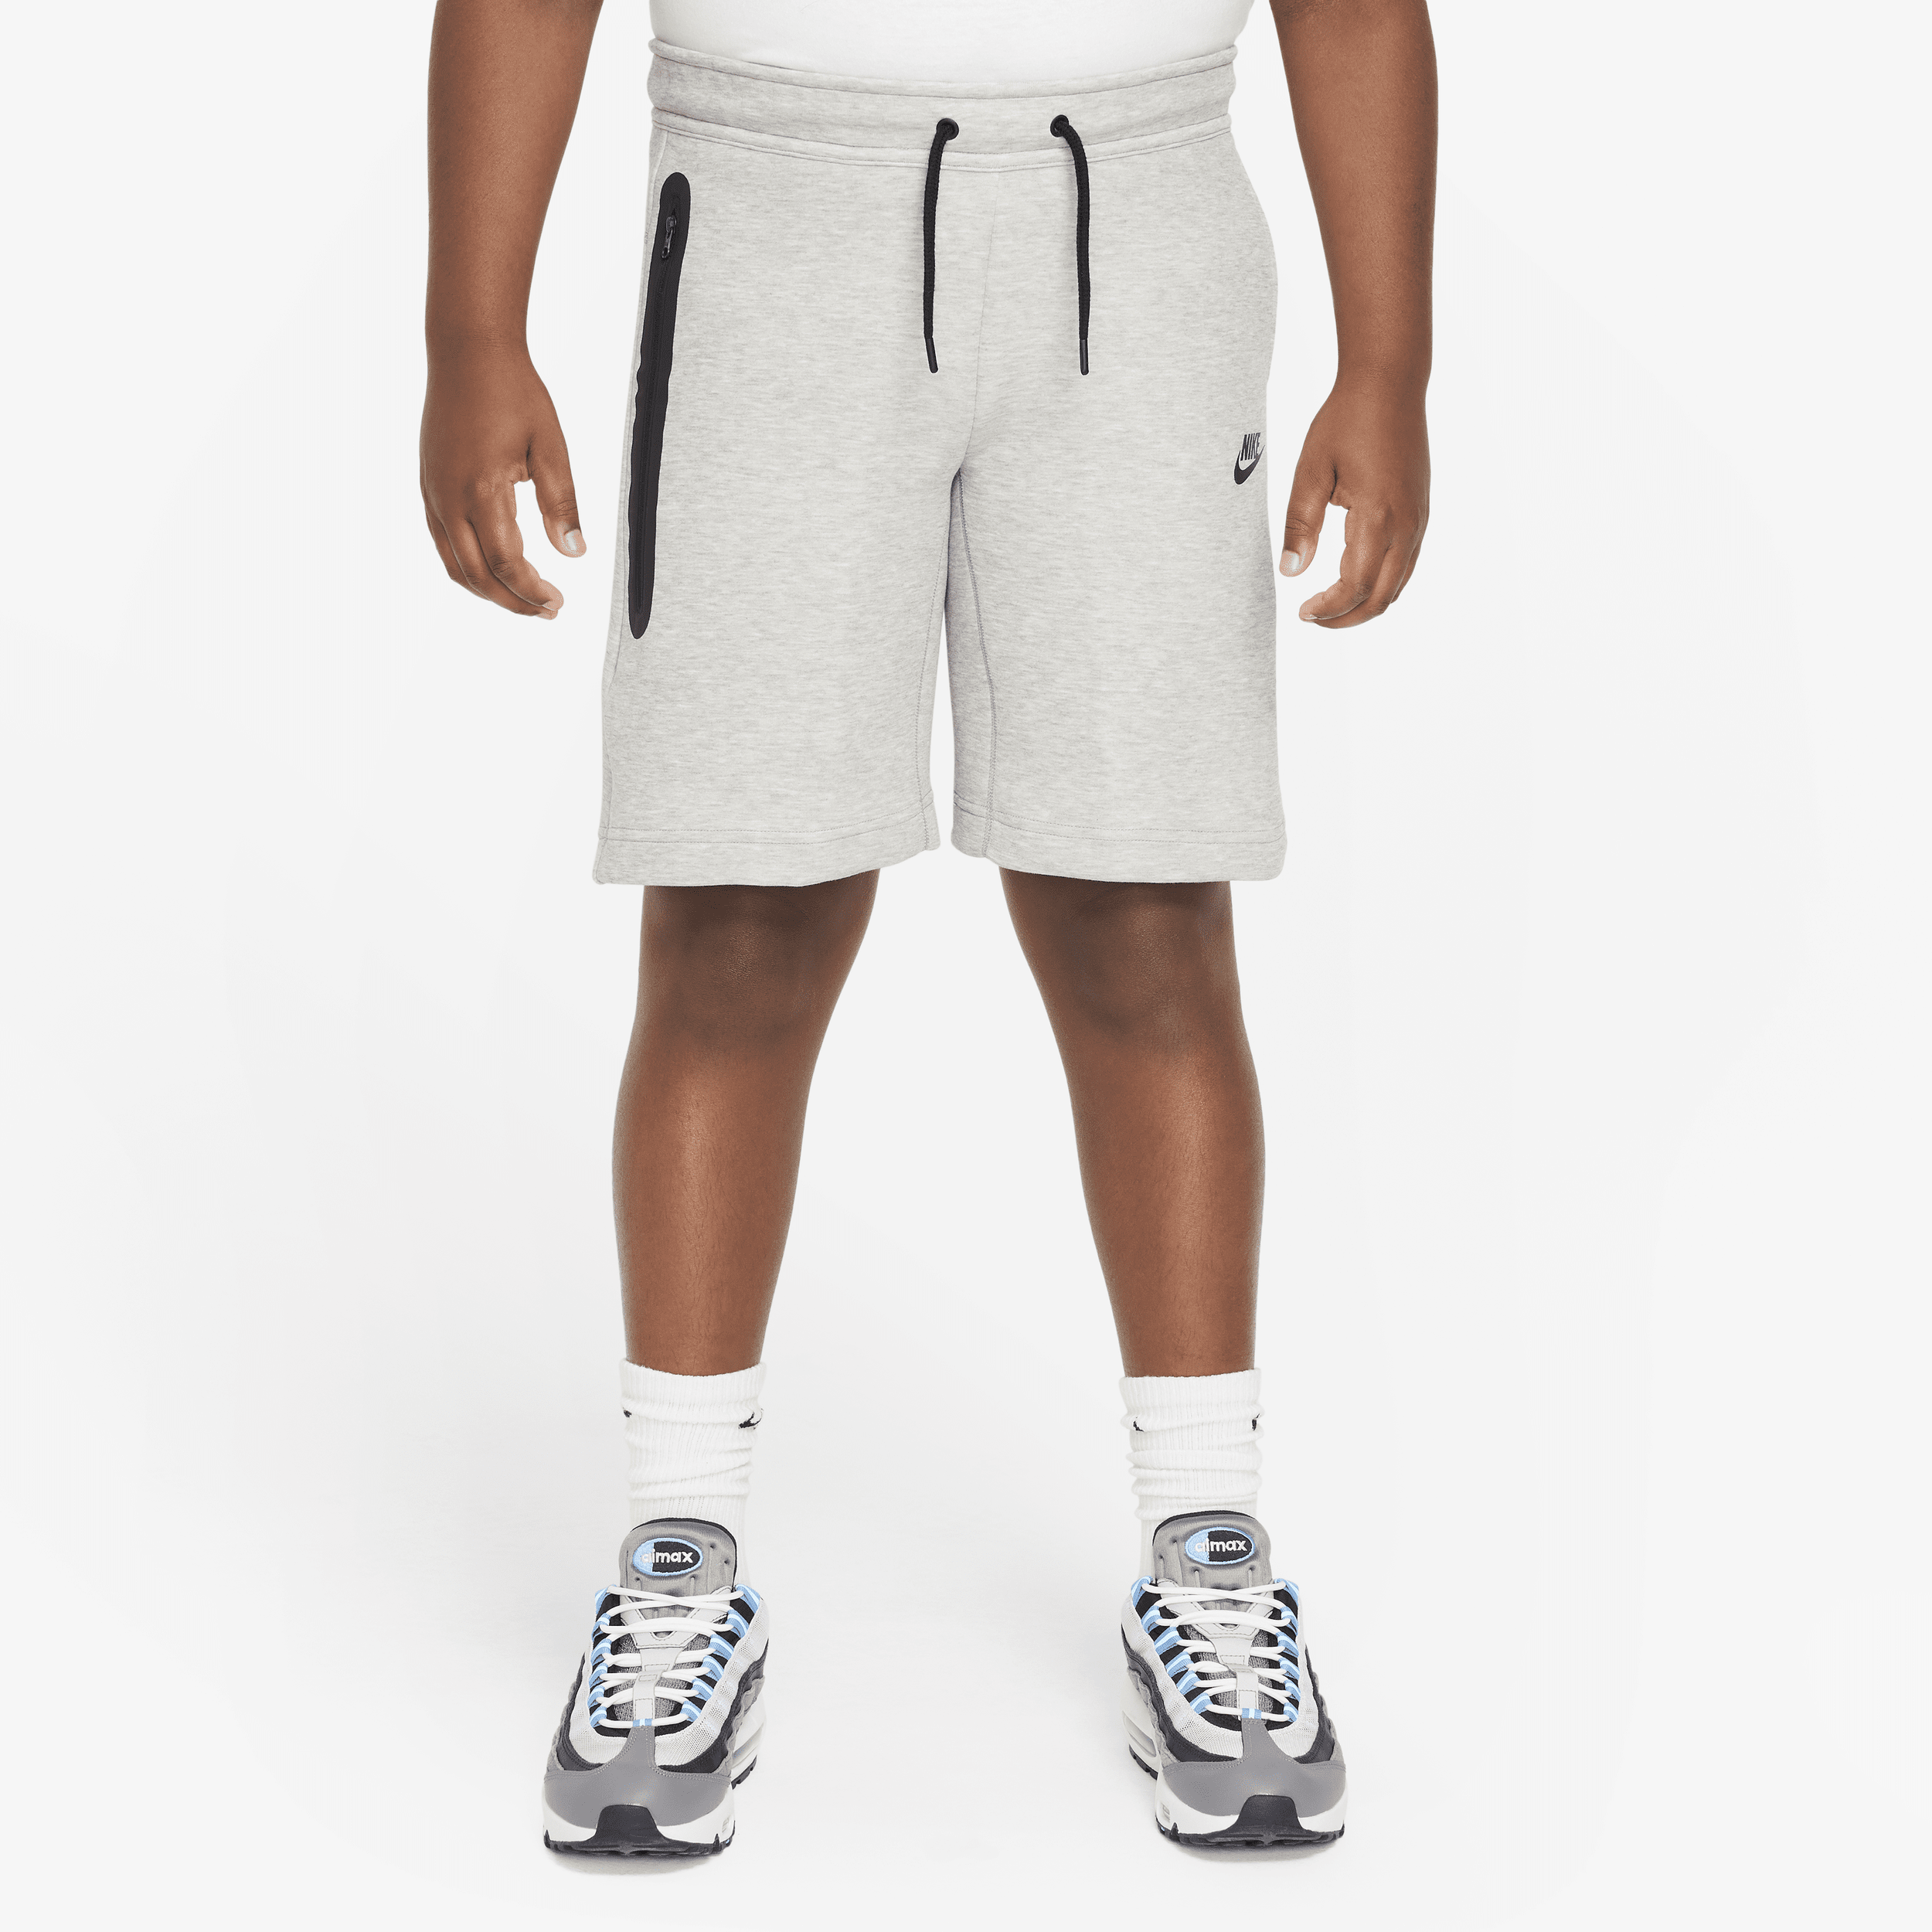 Shorts Nike Sportswear Tech Fleece (Taglia grande) – Ragazzo - Grigio